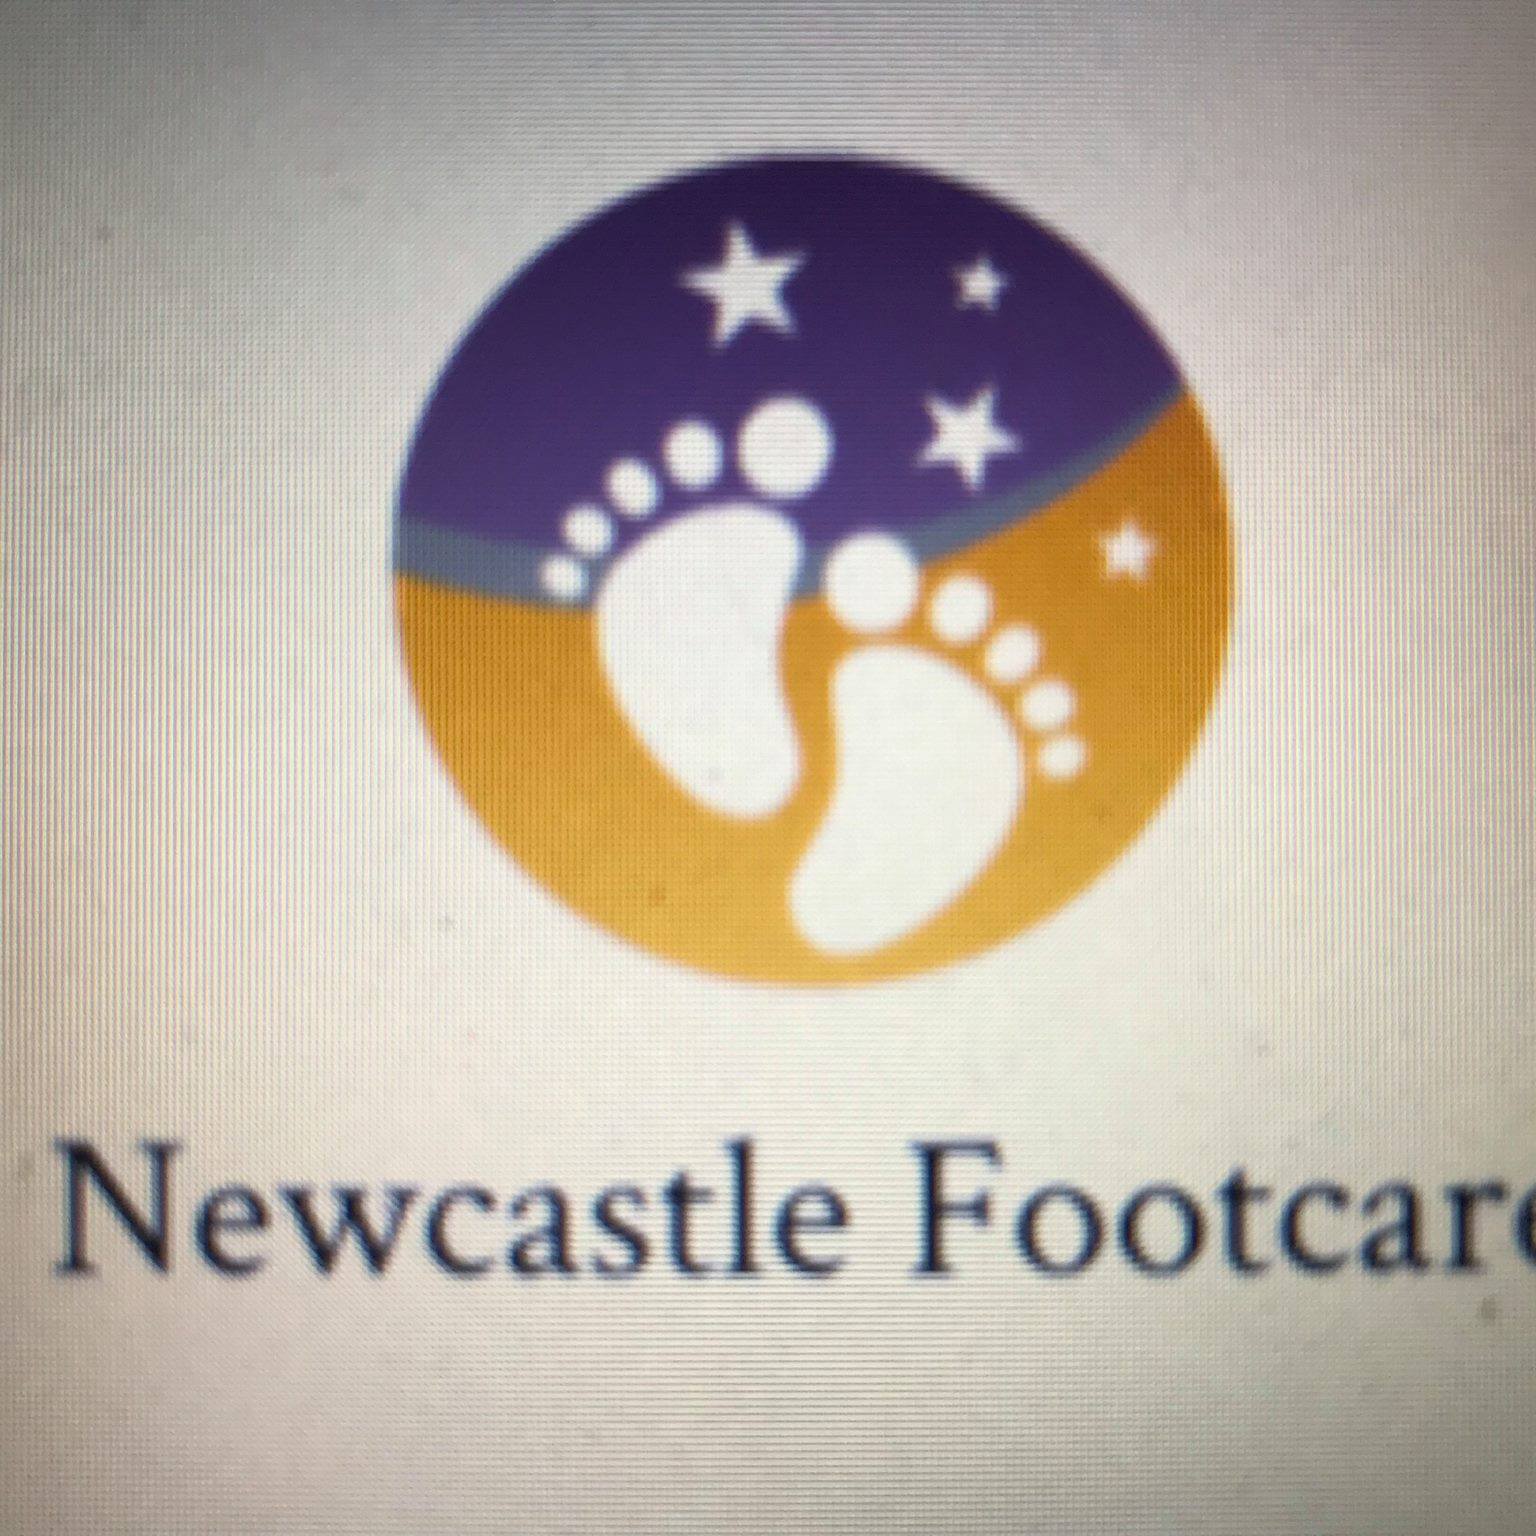 Newcastle Footcare